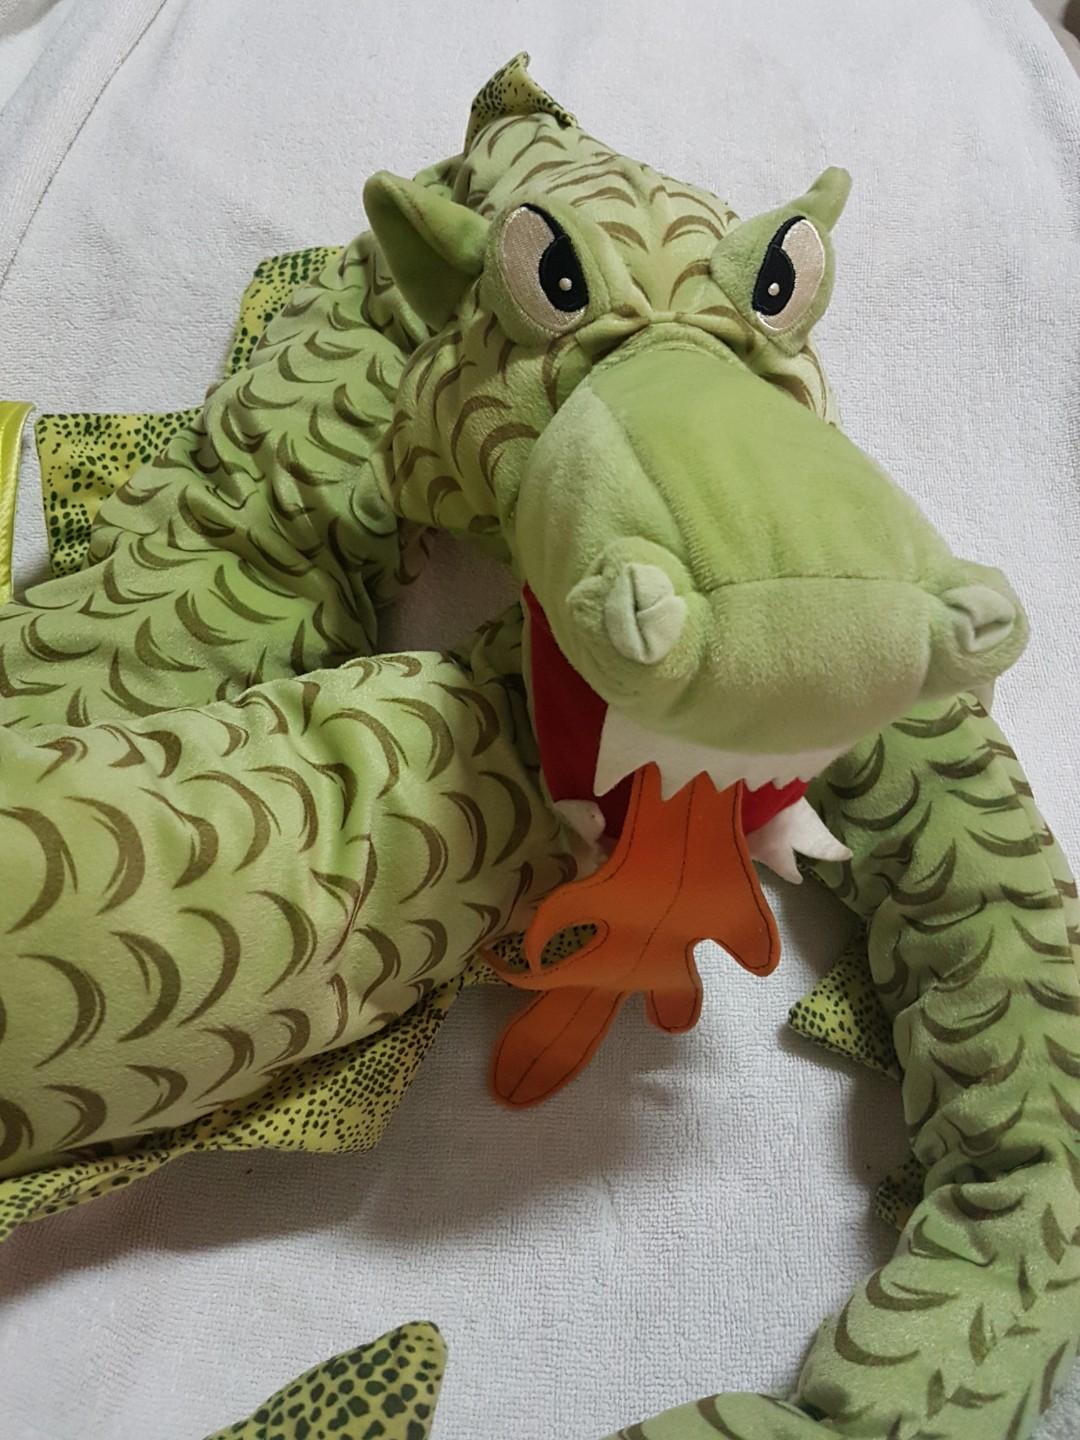 ikea dragon toy